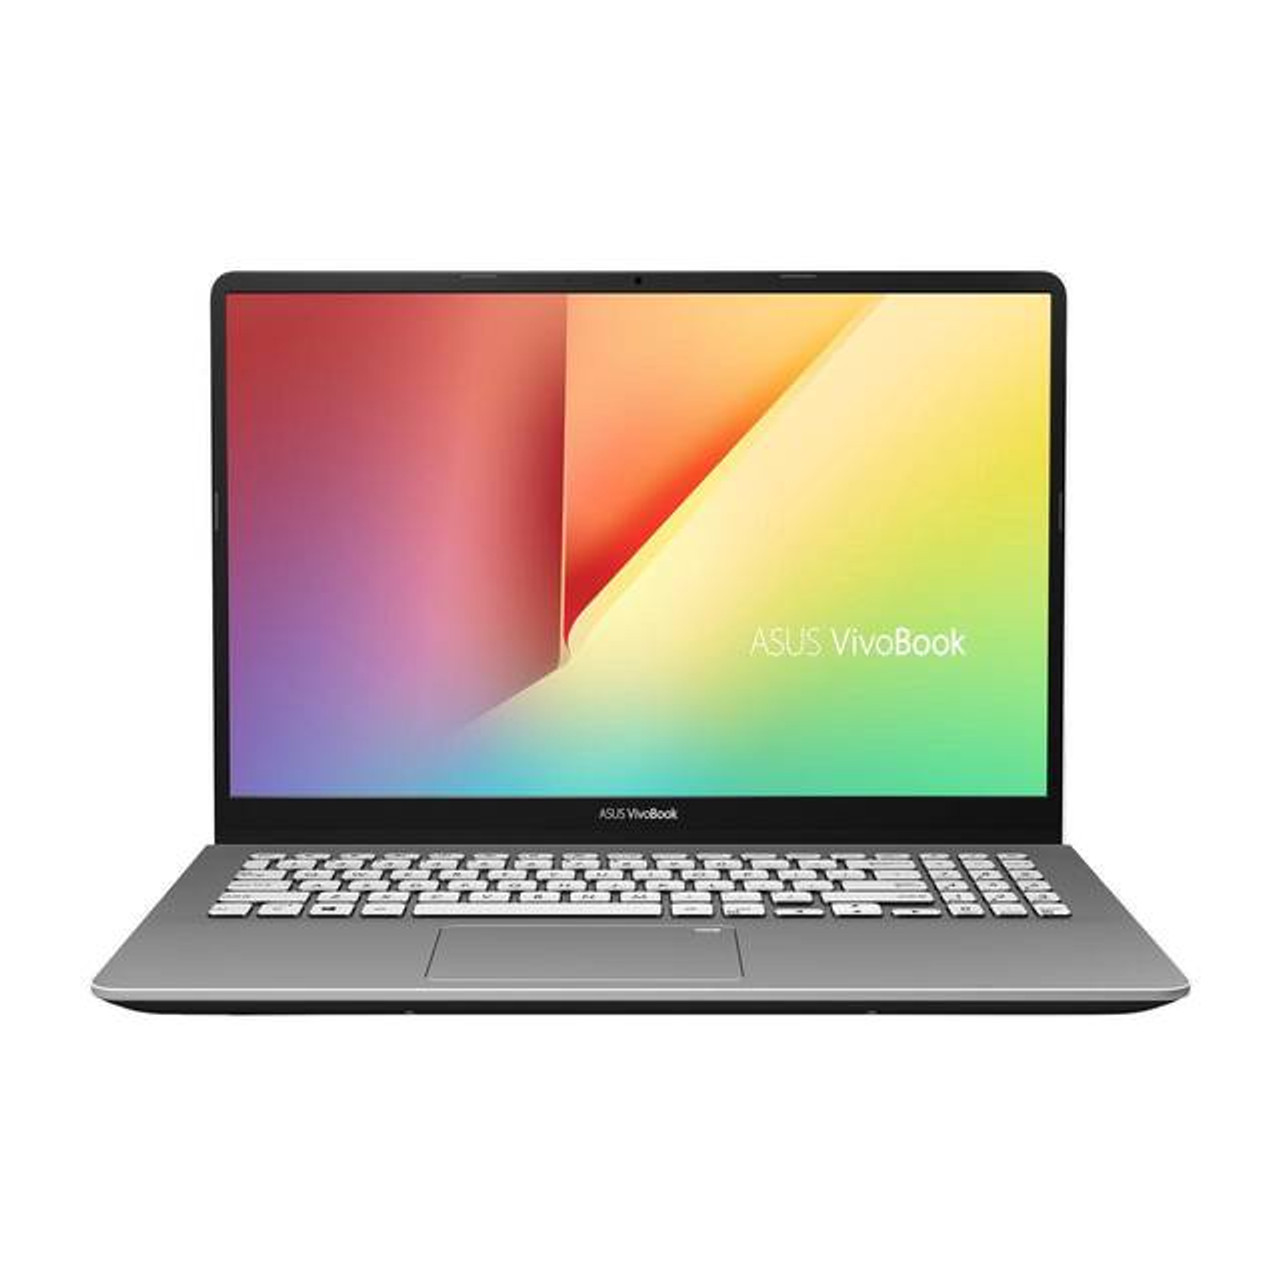 Asus VivoBook S15 S530UA-DB51 15.6 inch Intel Core i5-8250U 1.6GHz/ 8GB DDR4 / 256GB SDD/ USB3.1/ Win